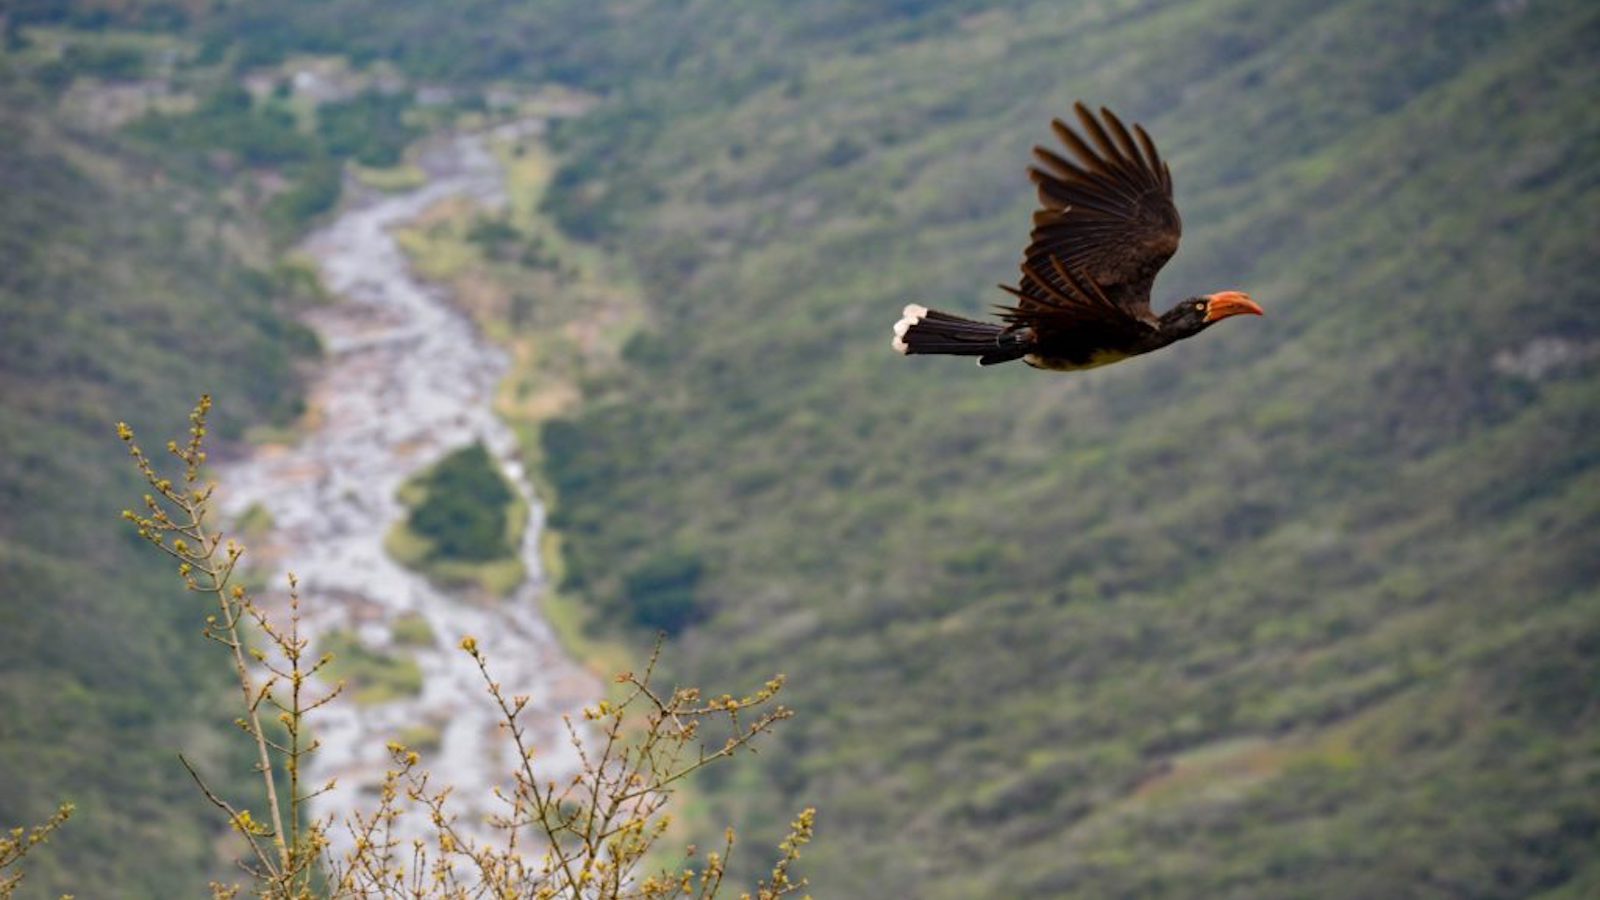 Black Toucan flying over river